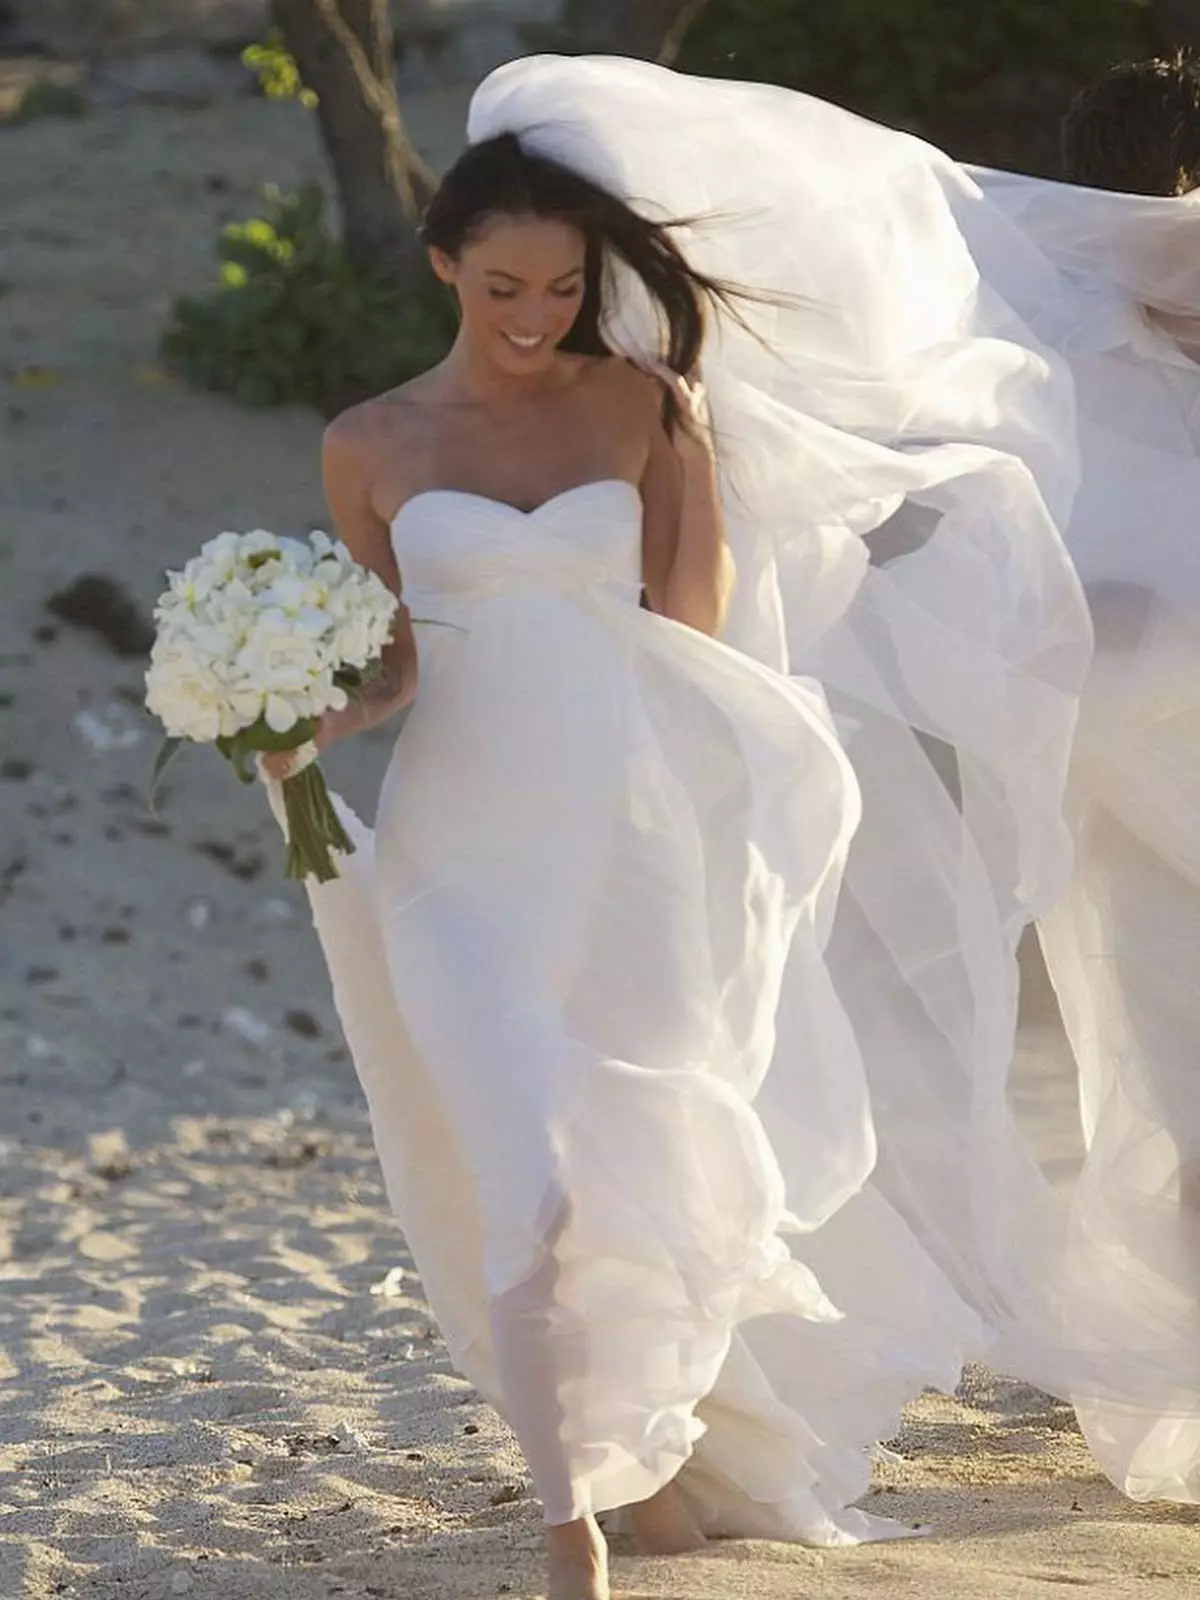 Gaun pengantin megan rubah